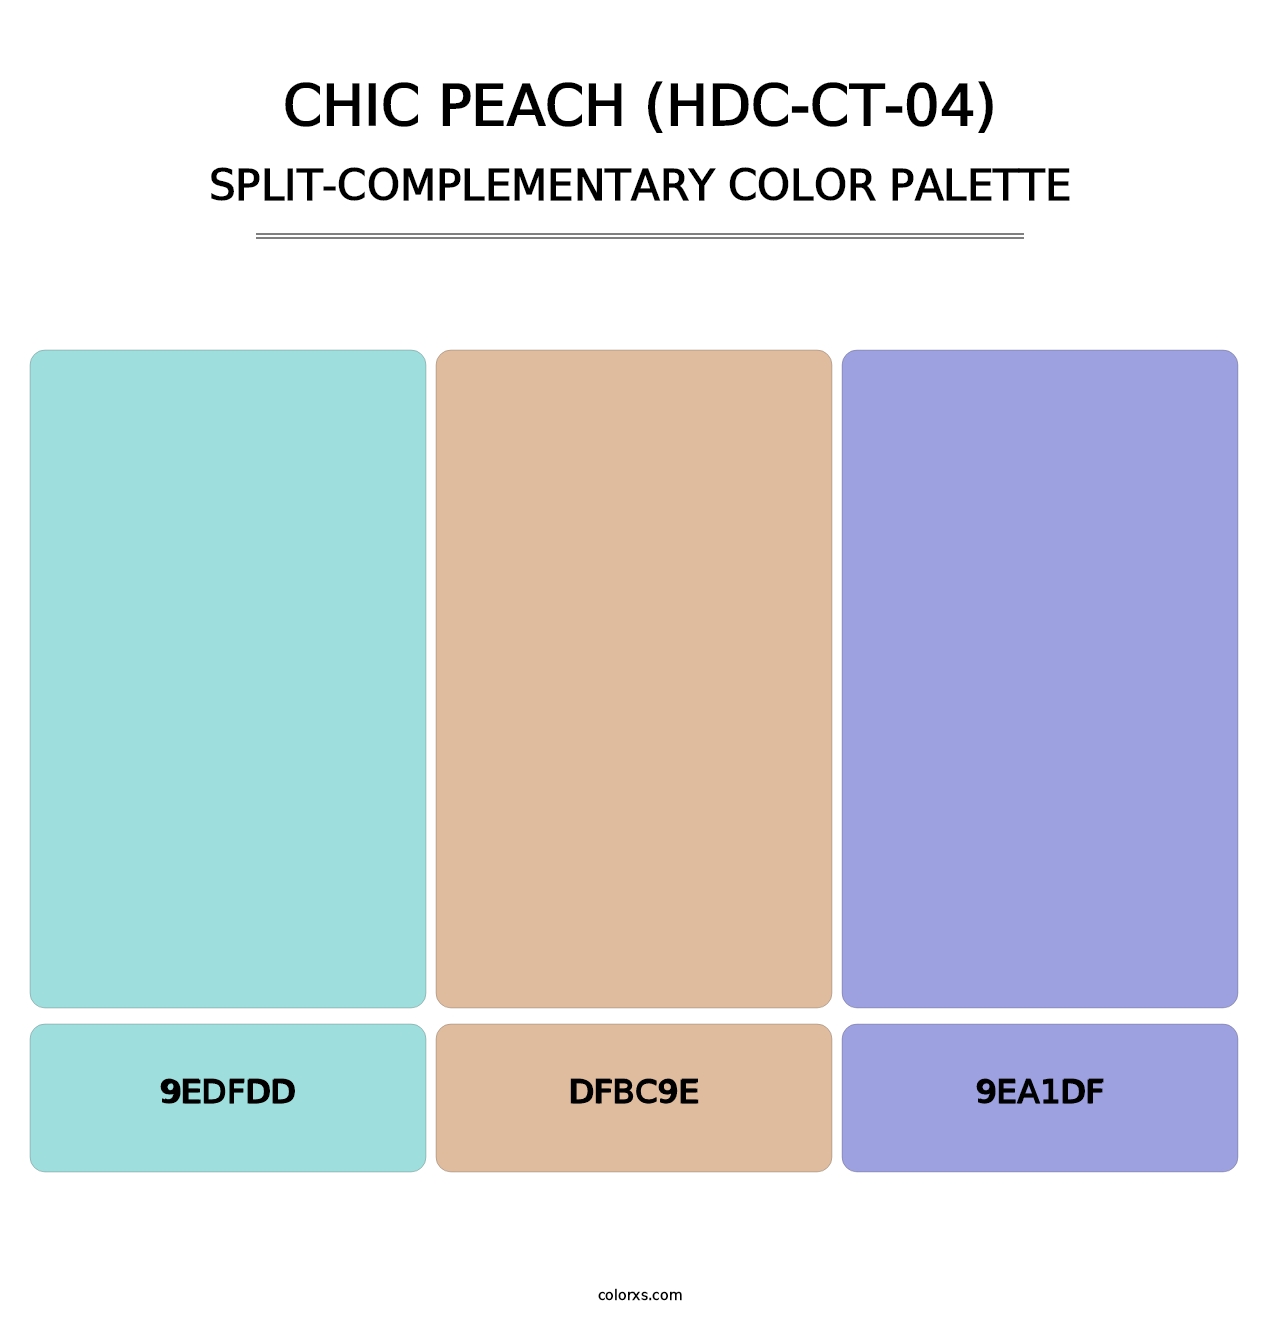 Chic Peach (HDC-CT-04) - Split-Complementary Color Palette